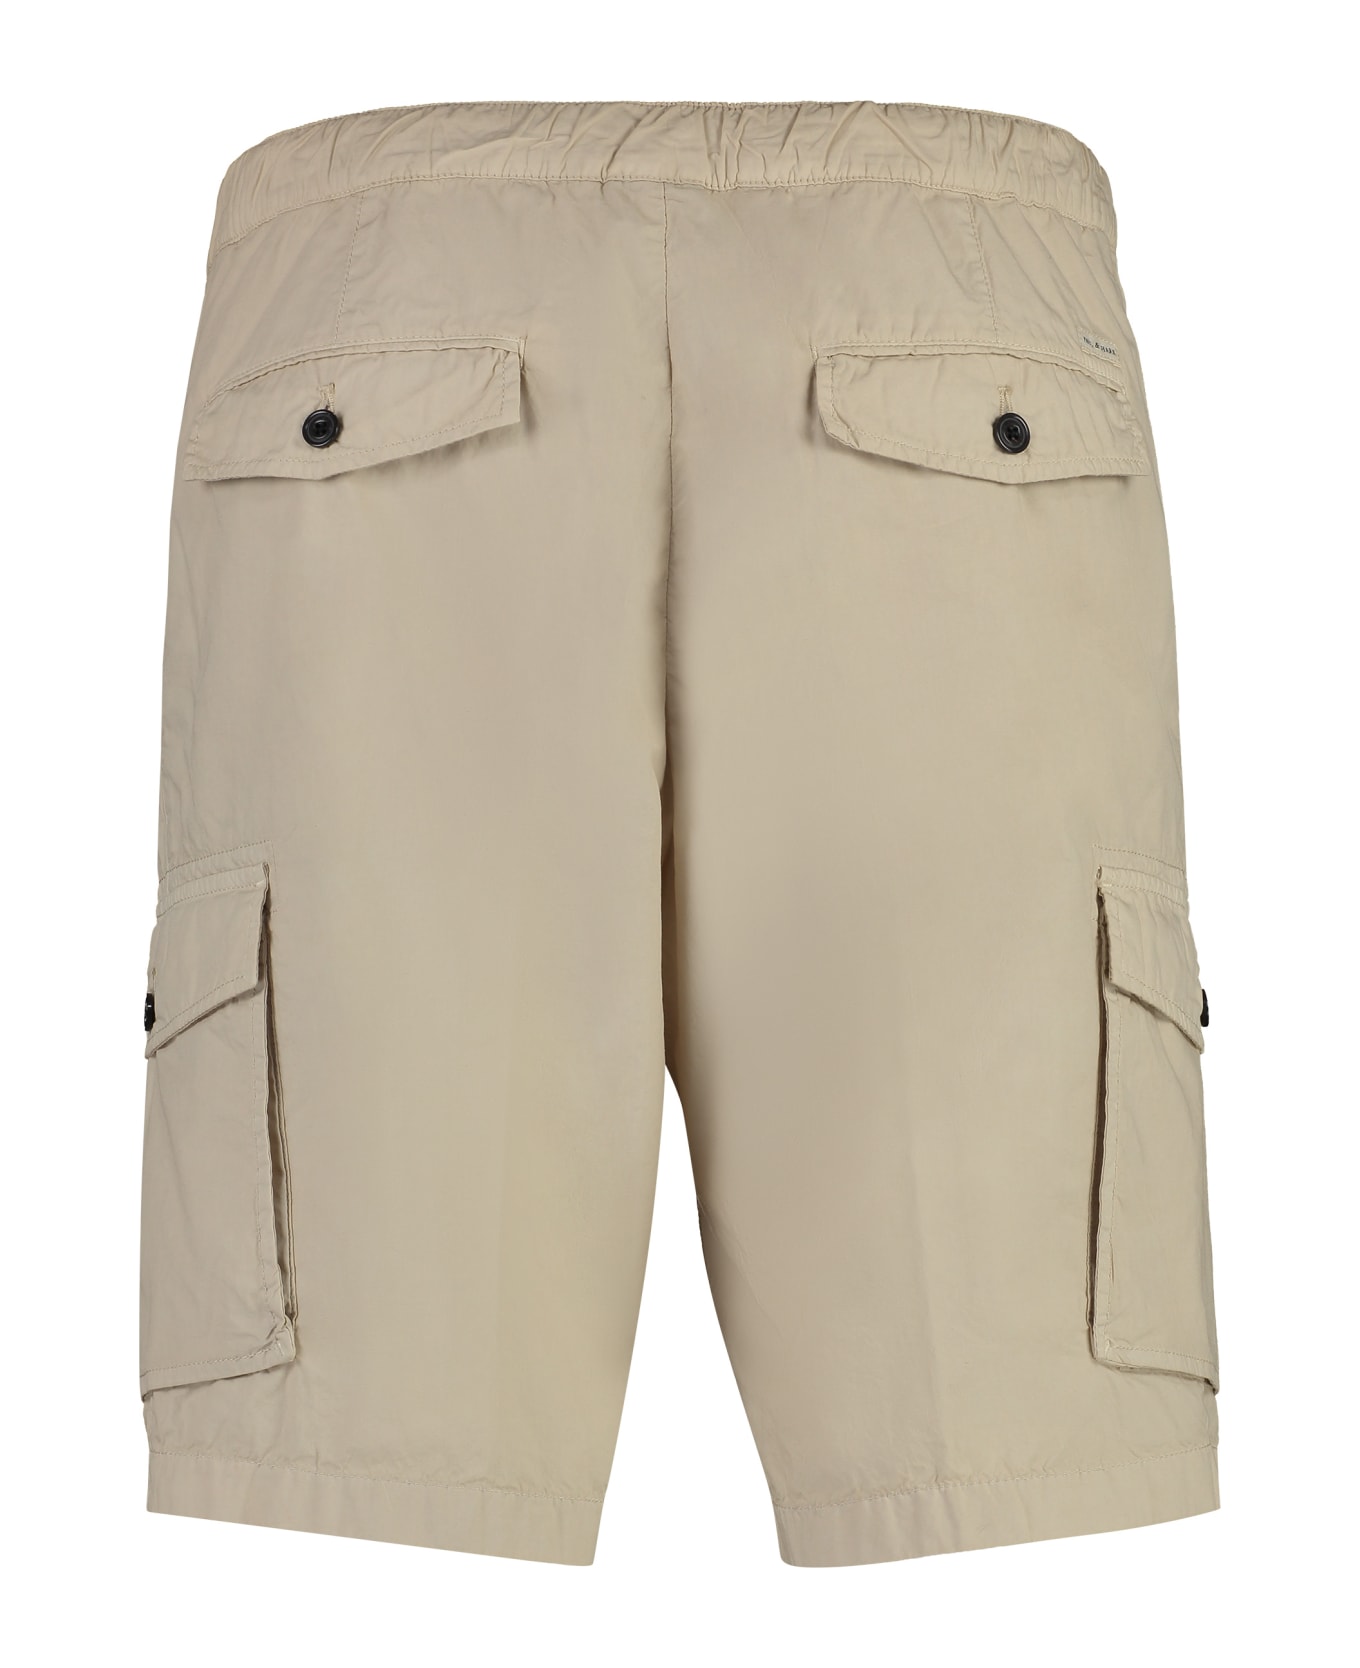 Paul&Shark Cotton Bermuda Shorts - Sand ショートパンツ